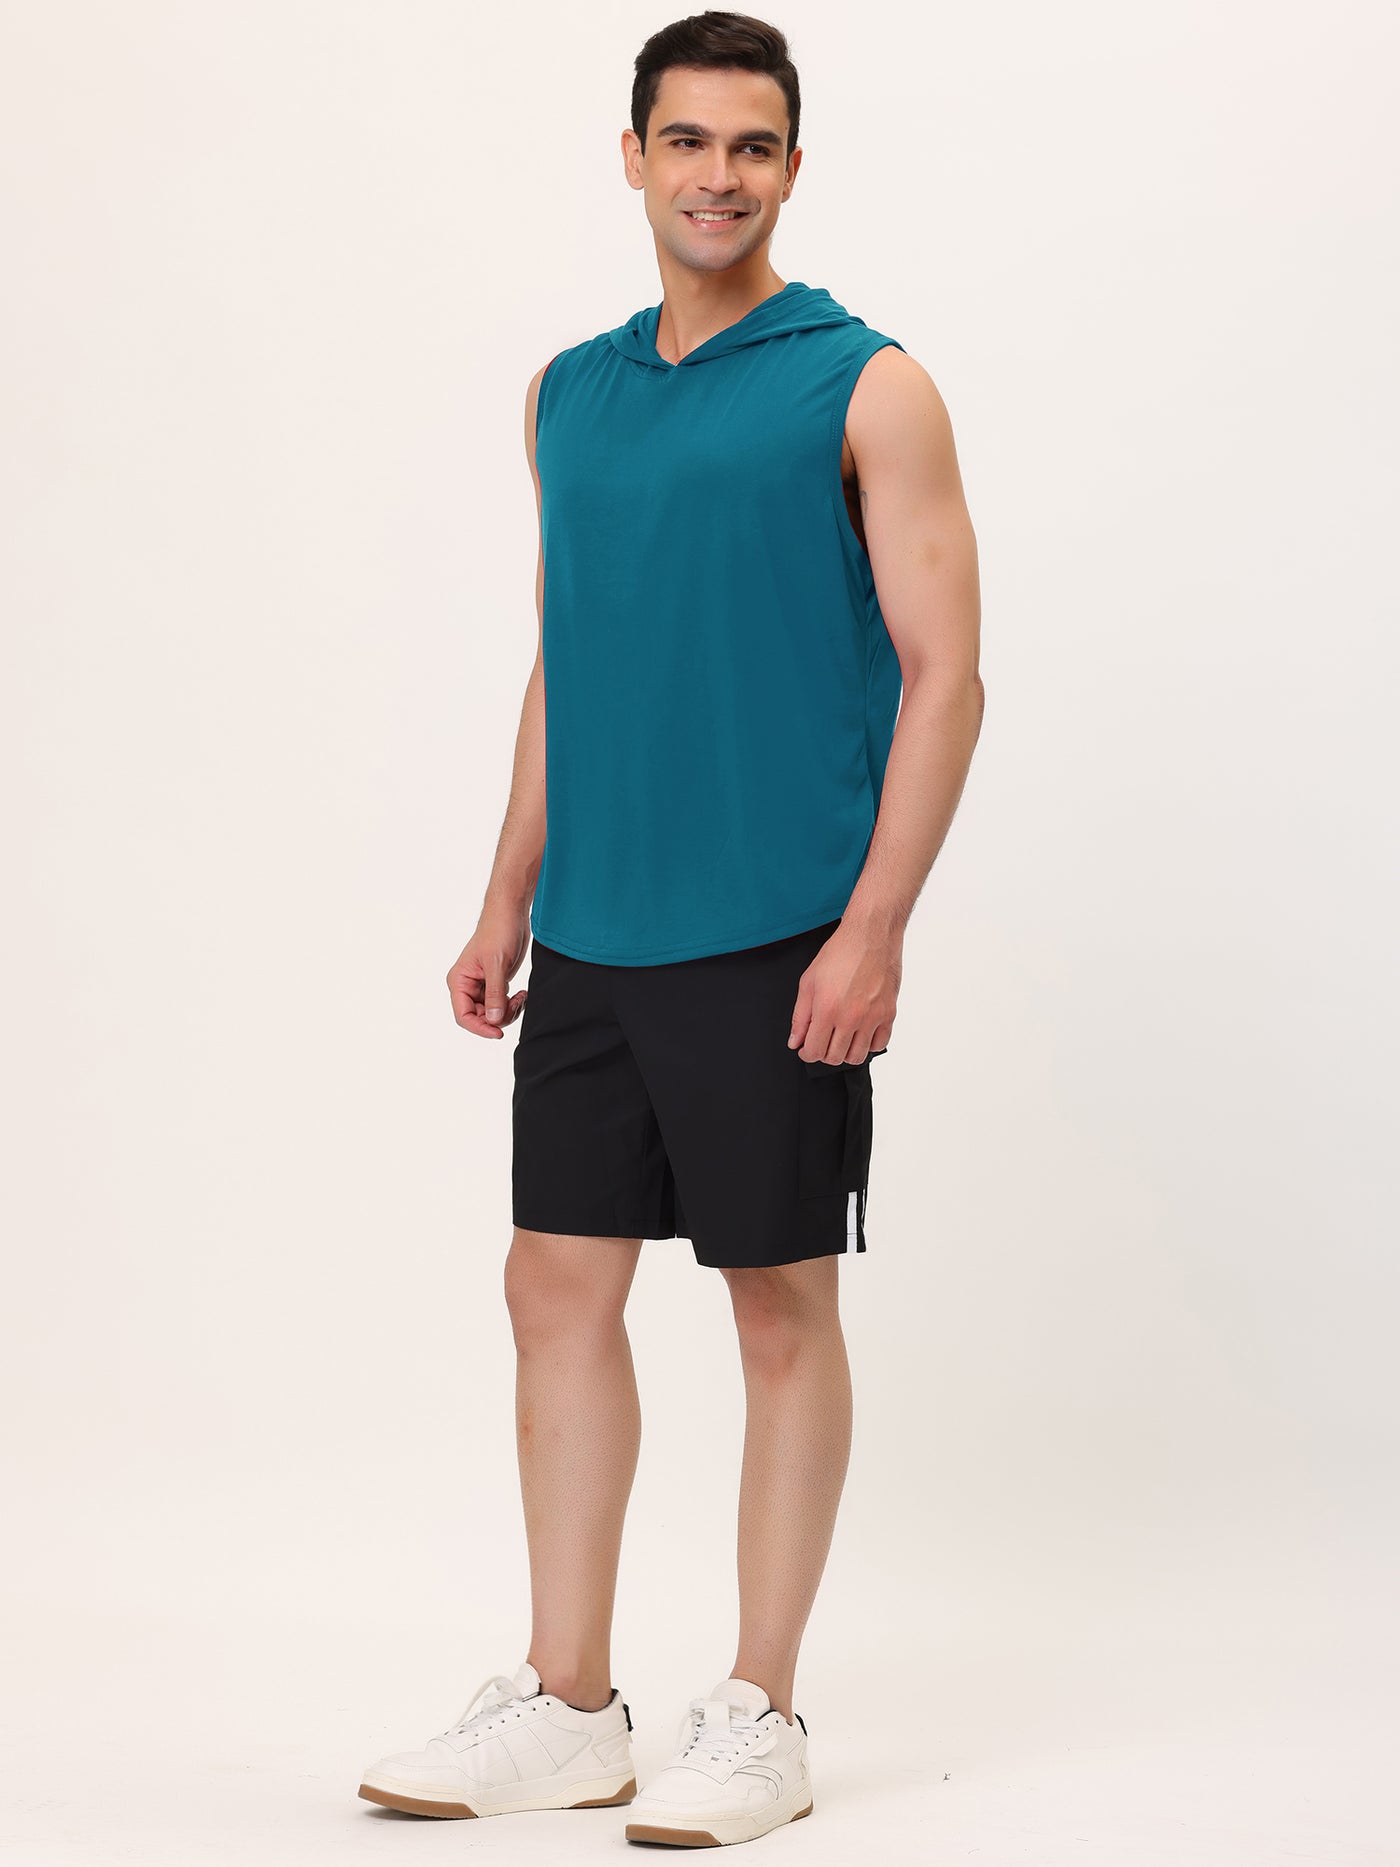 Bublédon Workout Gym Tank Tops Drawstring Hooded Vest